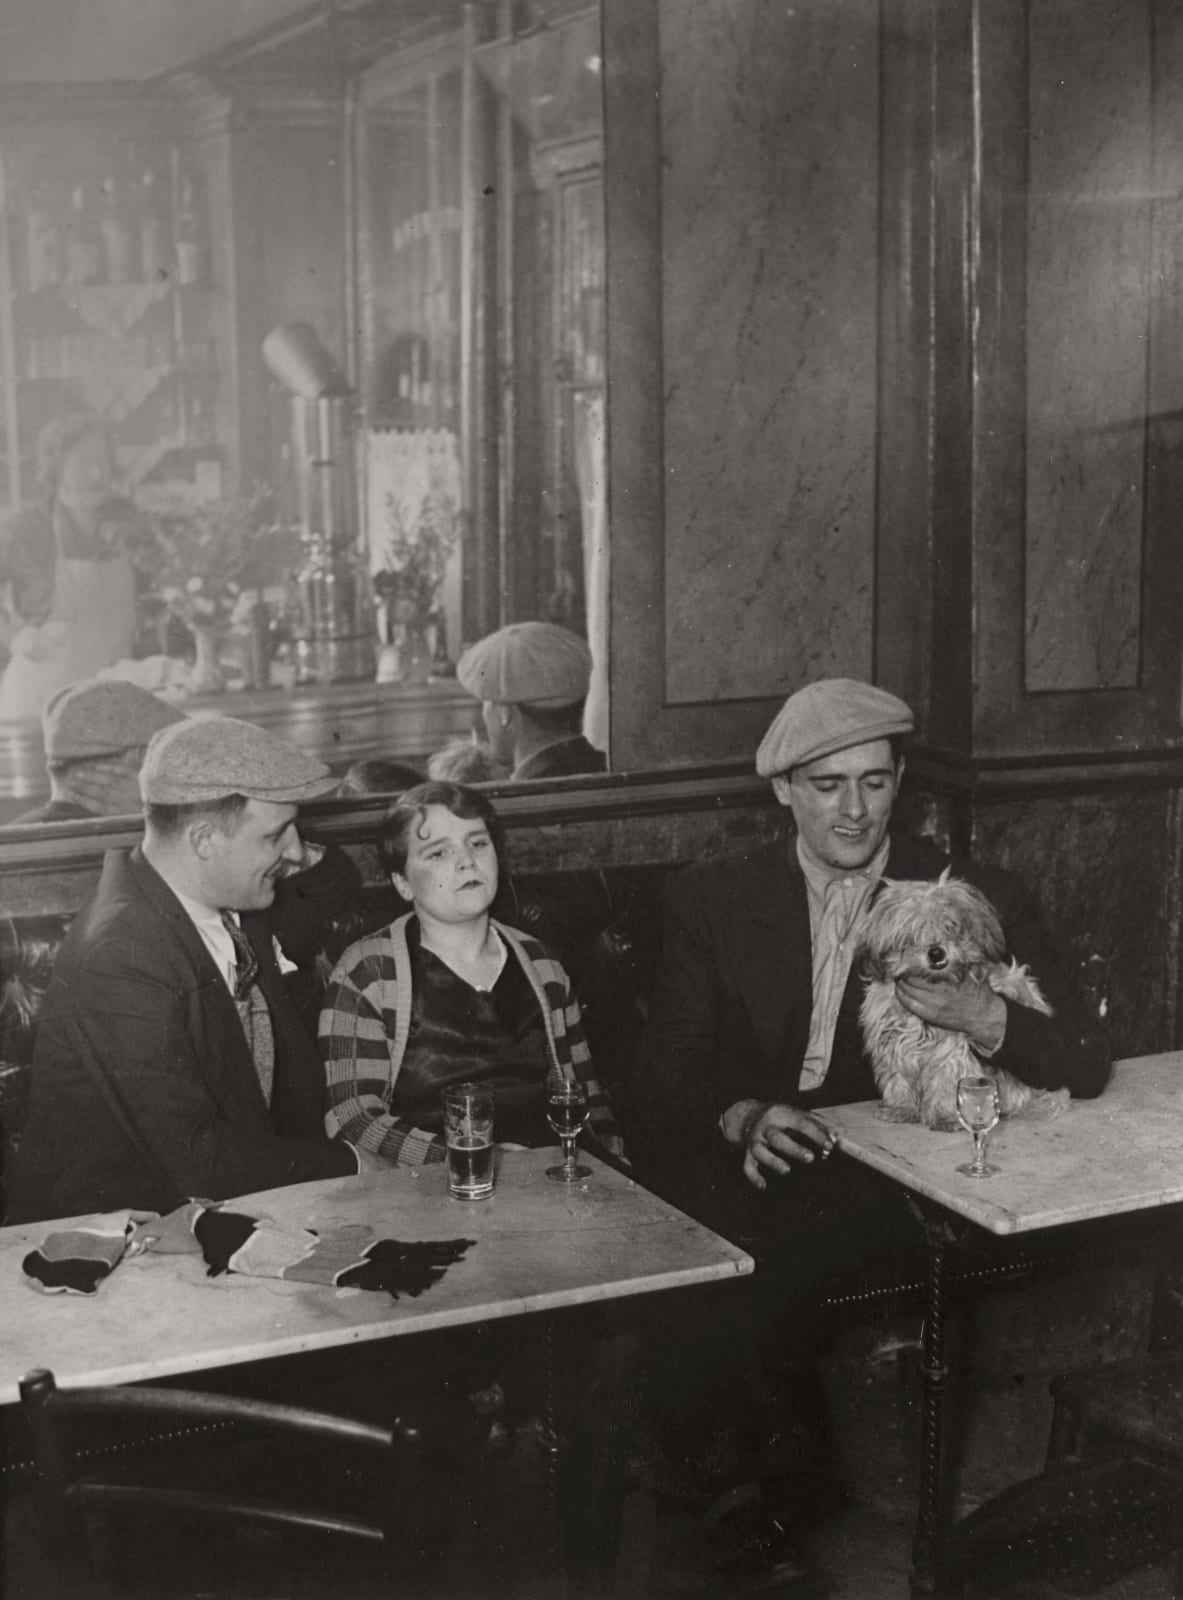 Cafe scene in Paris by Brassai